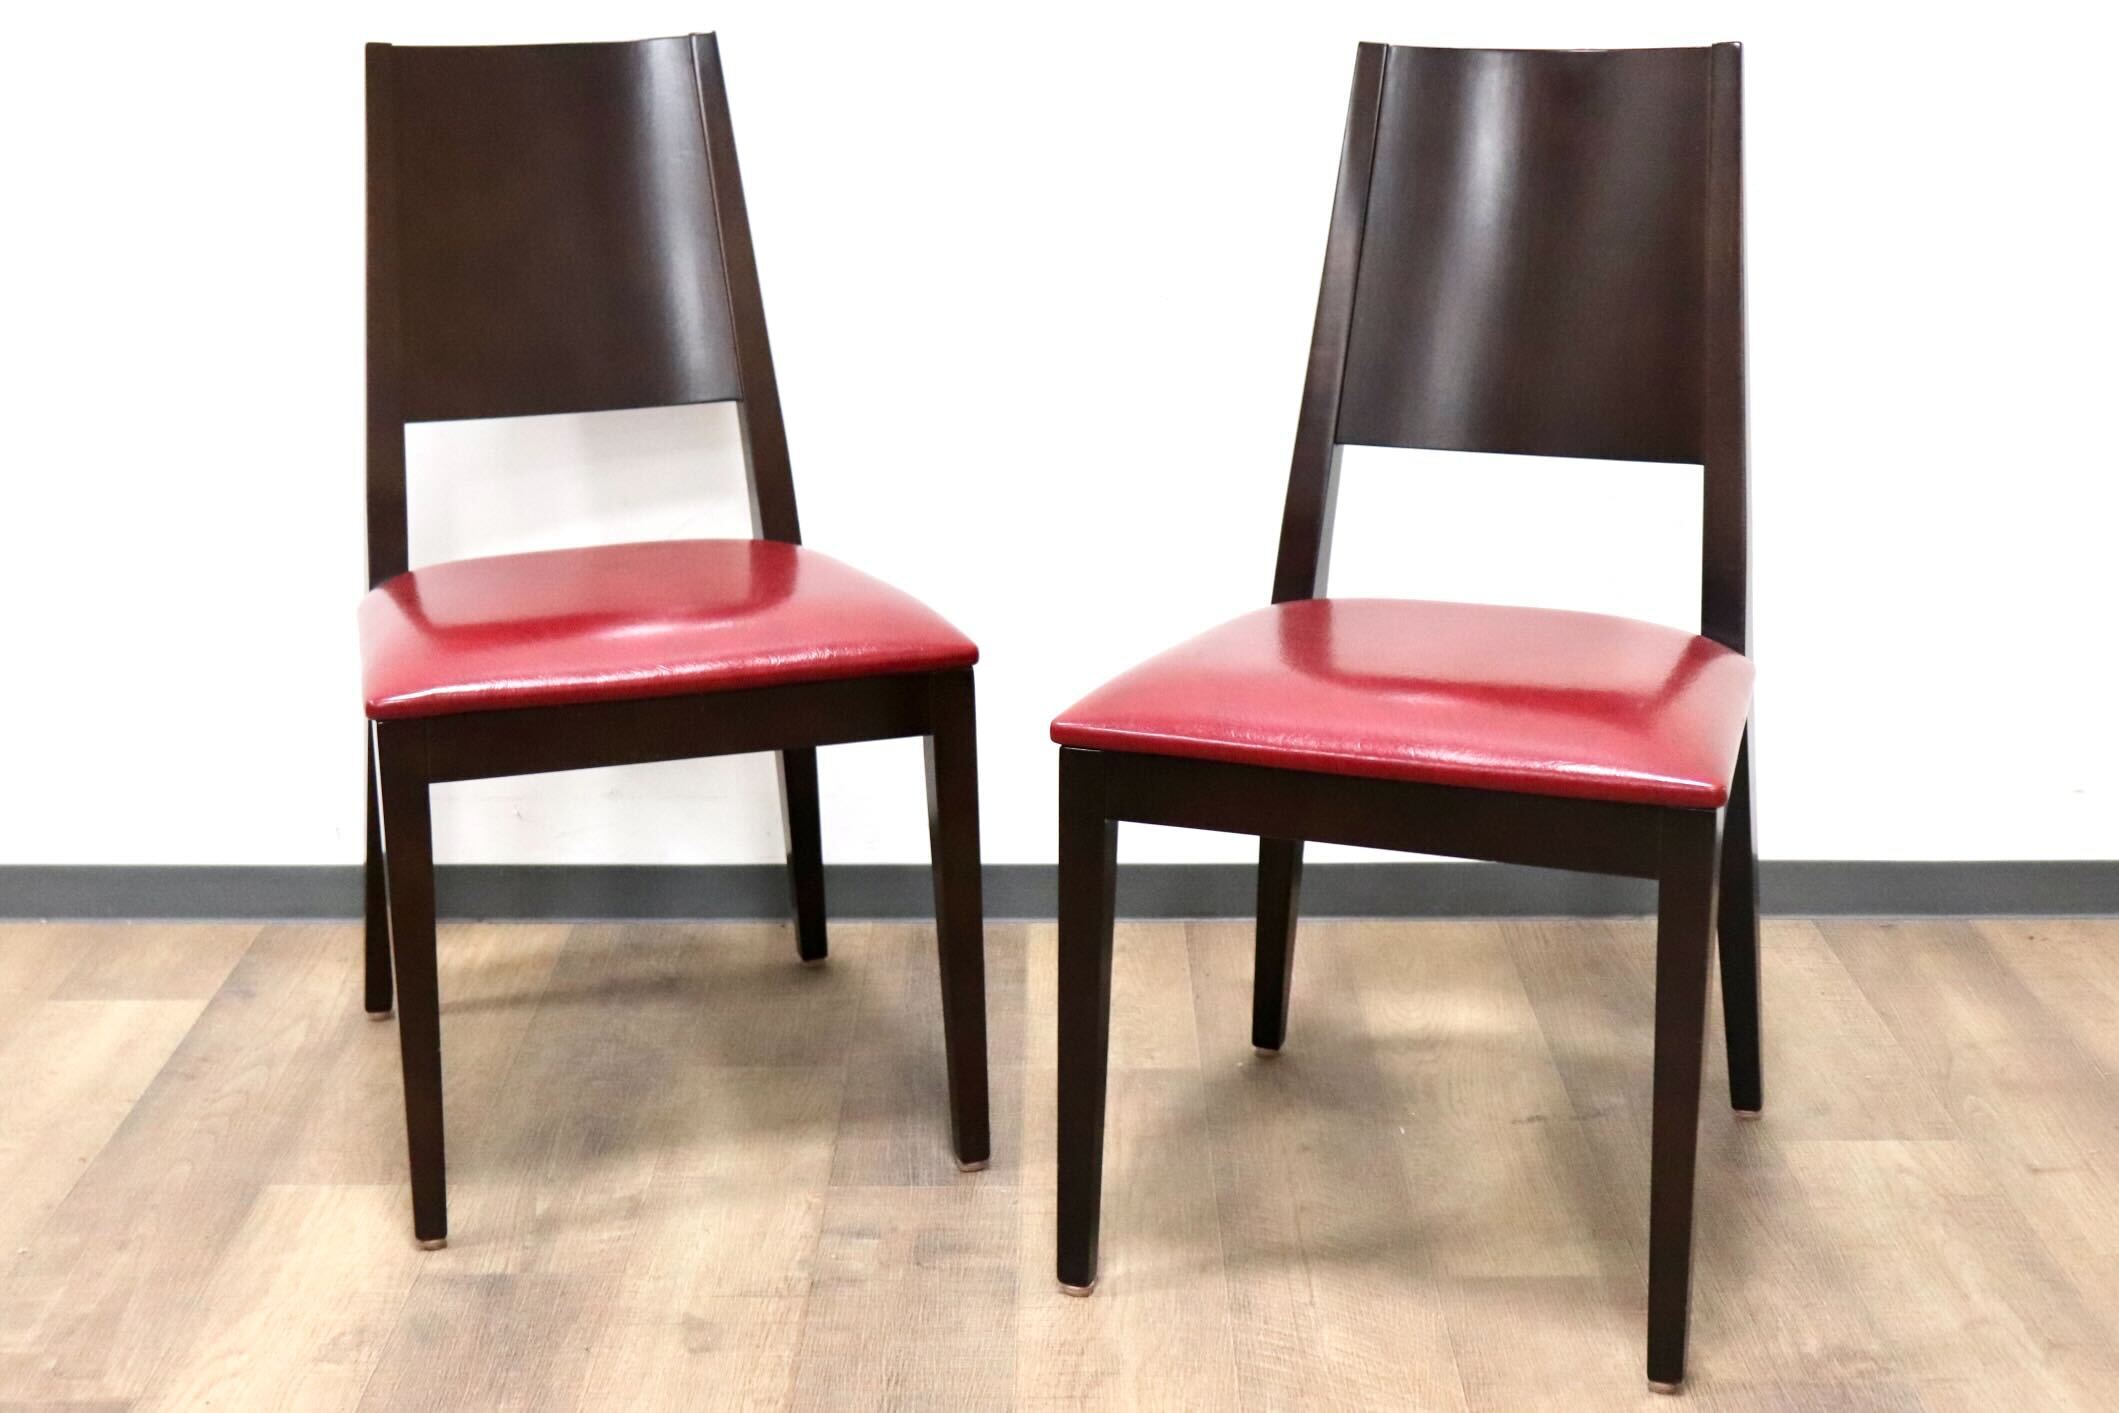 GMHH21B○CRES ダイニングチェア 椅子 2脚セット 食卓椅子 アームレスチェア 木製 合皮 モダン レトロ 店舗 カフェ 喫茶